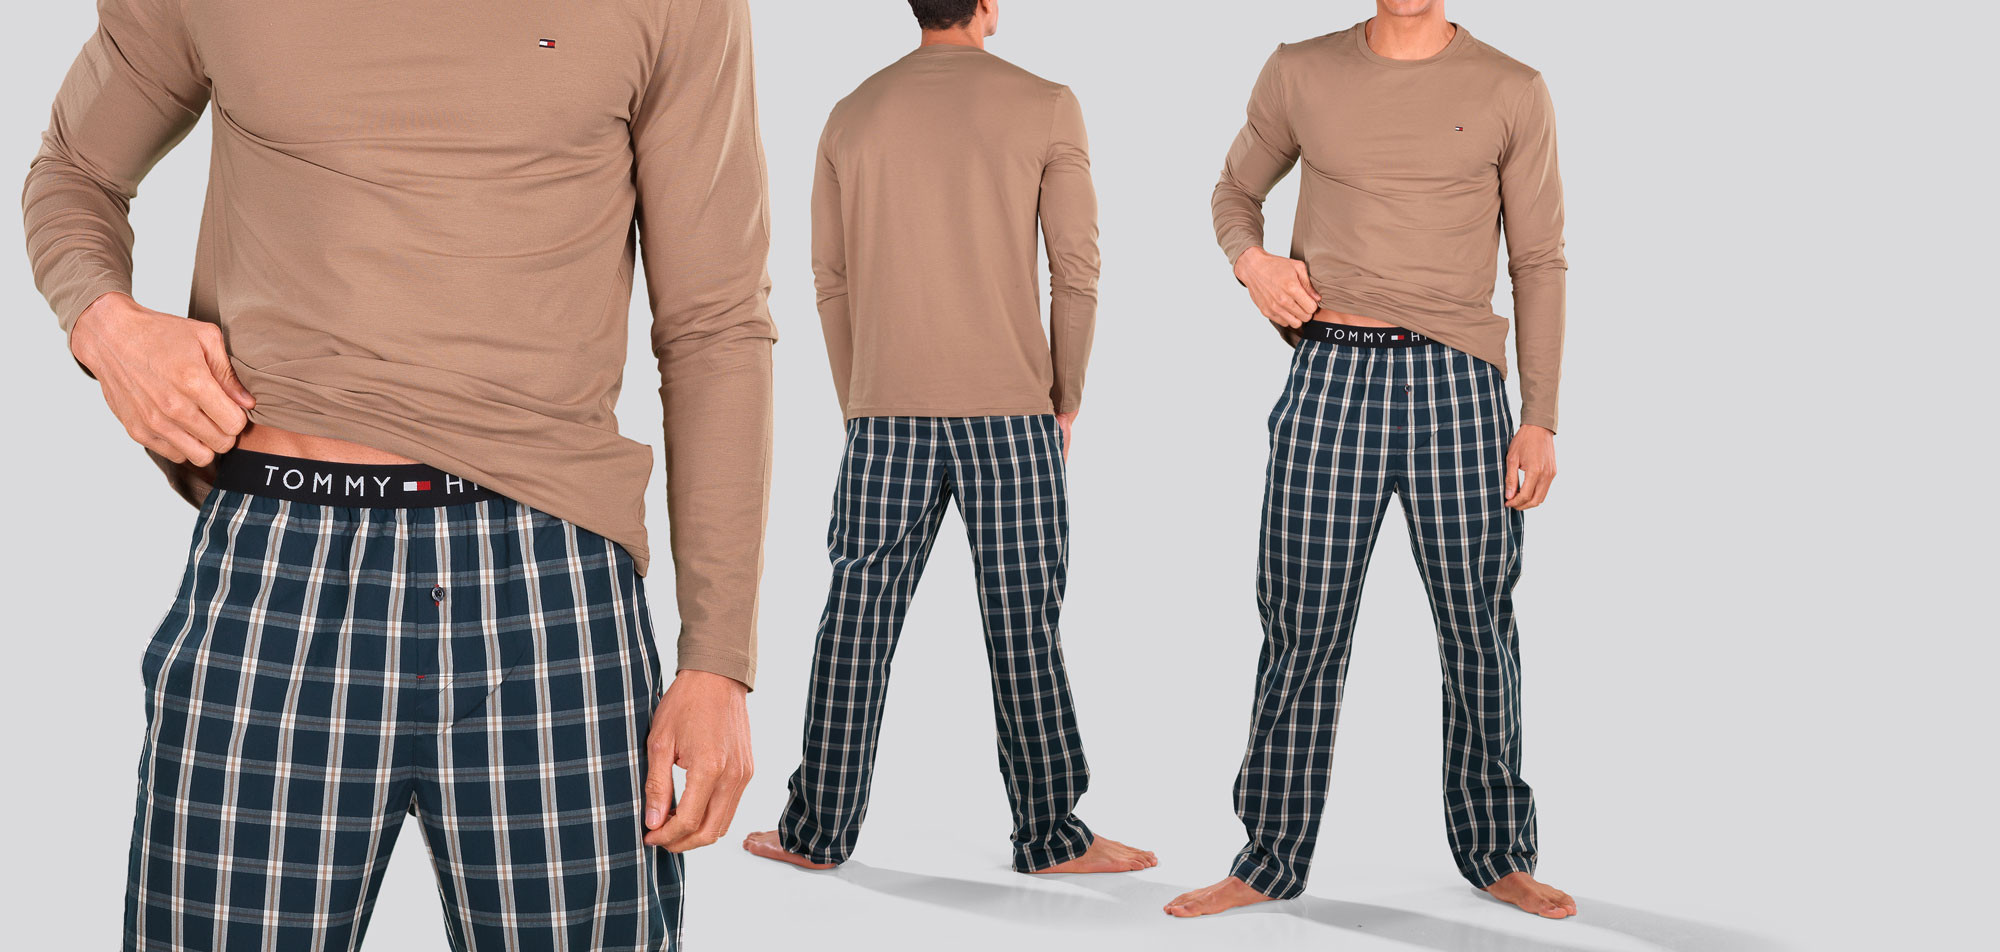 Tommy Hilfiger Pyjama Set 960 Woven Set